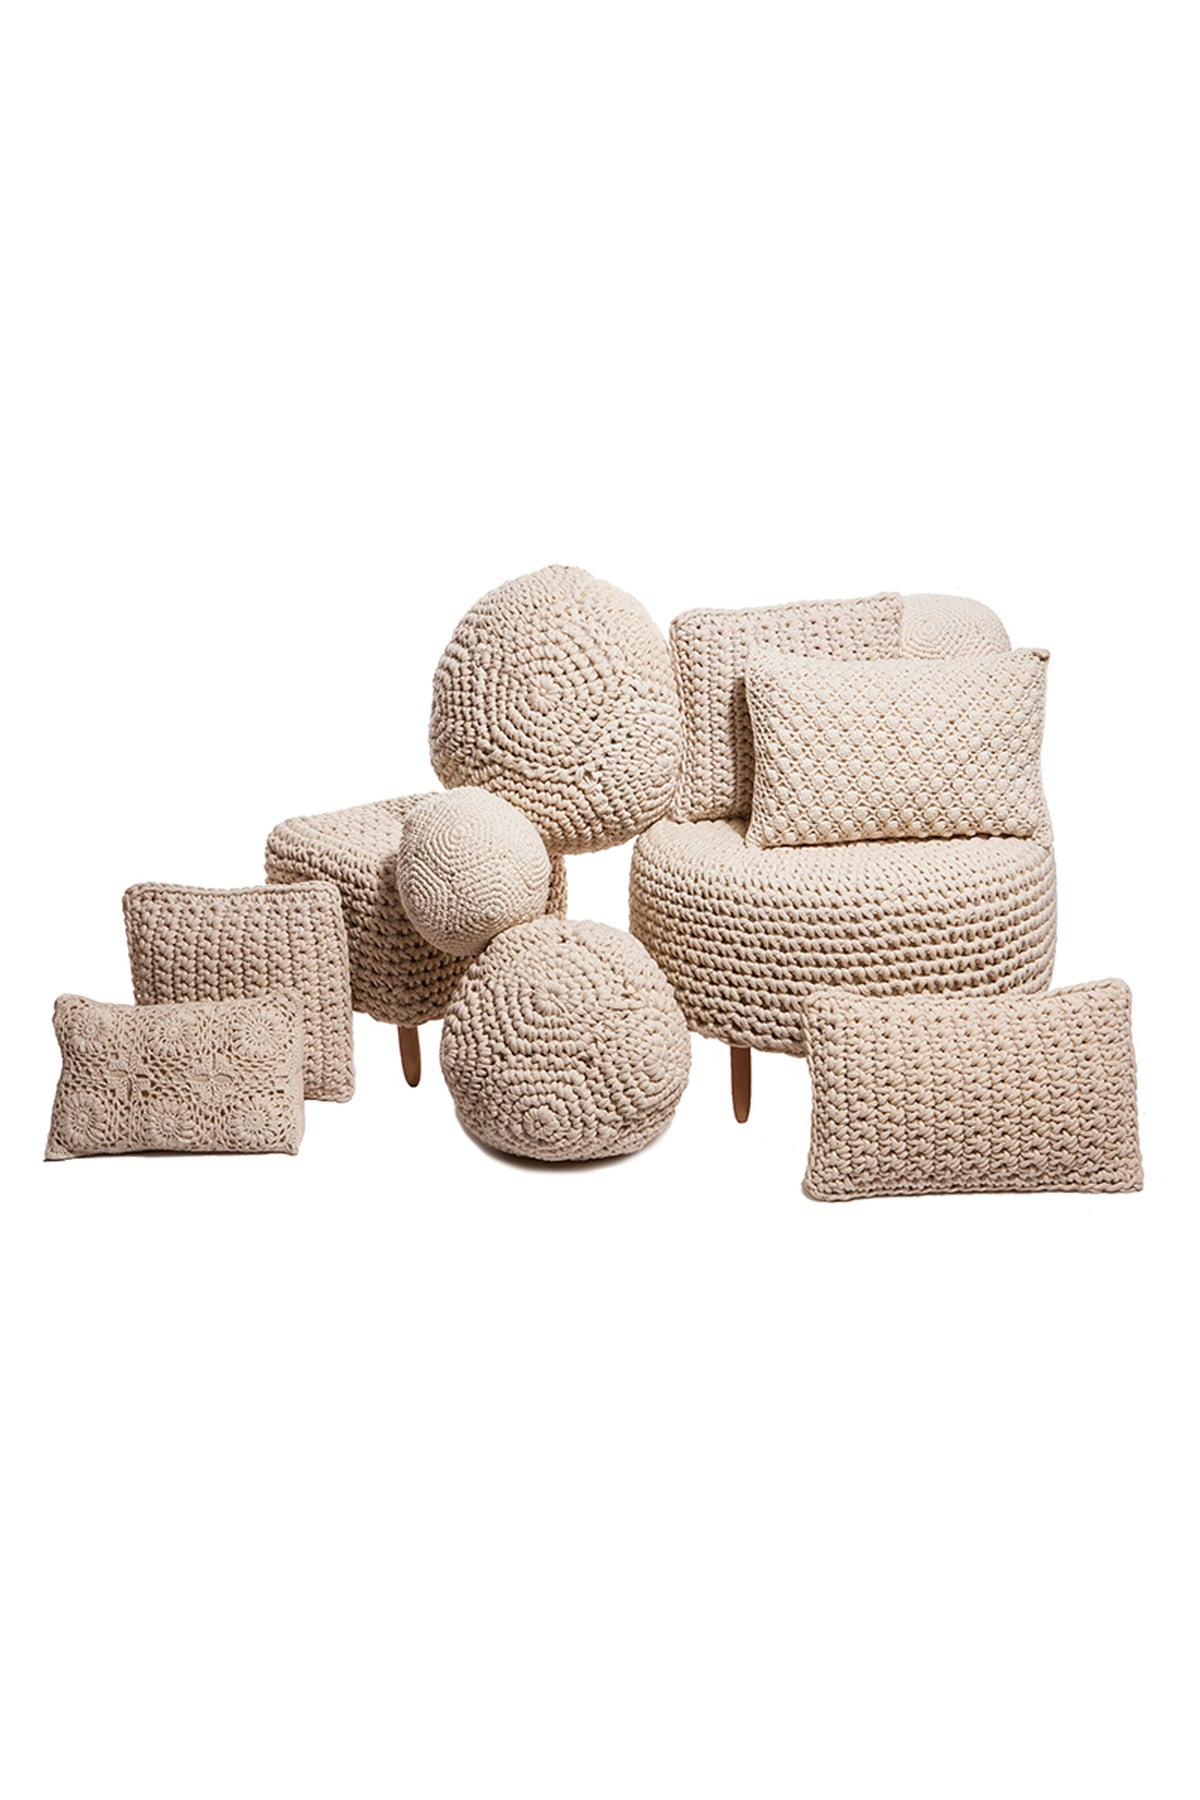 Crochet Square Pillow - Carolina K